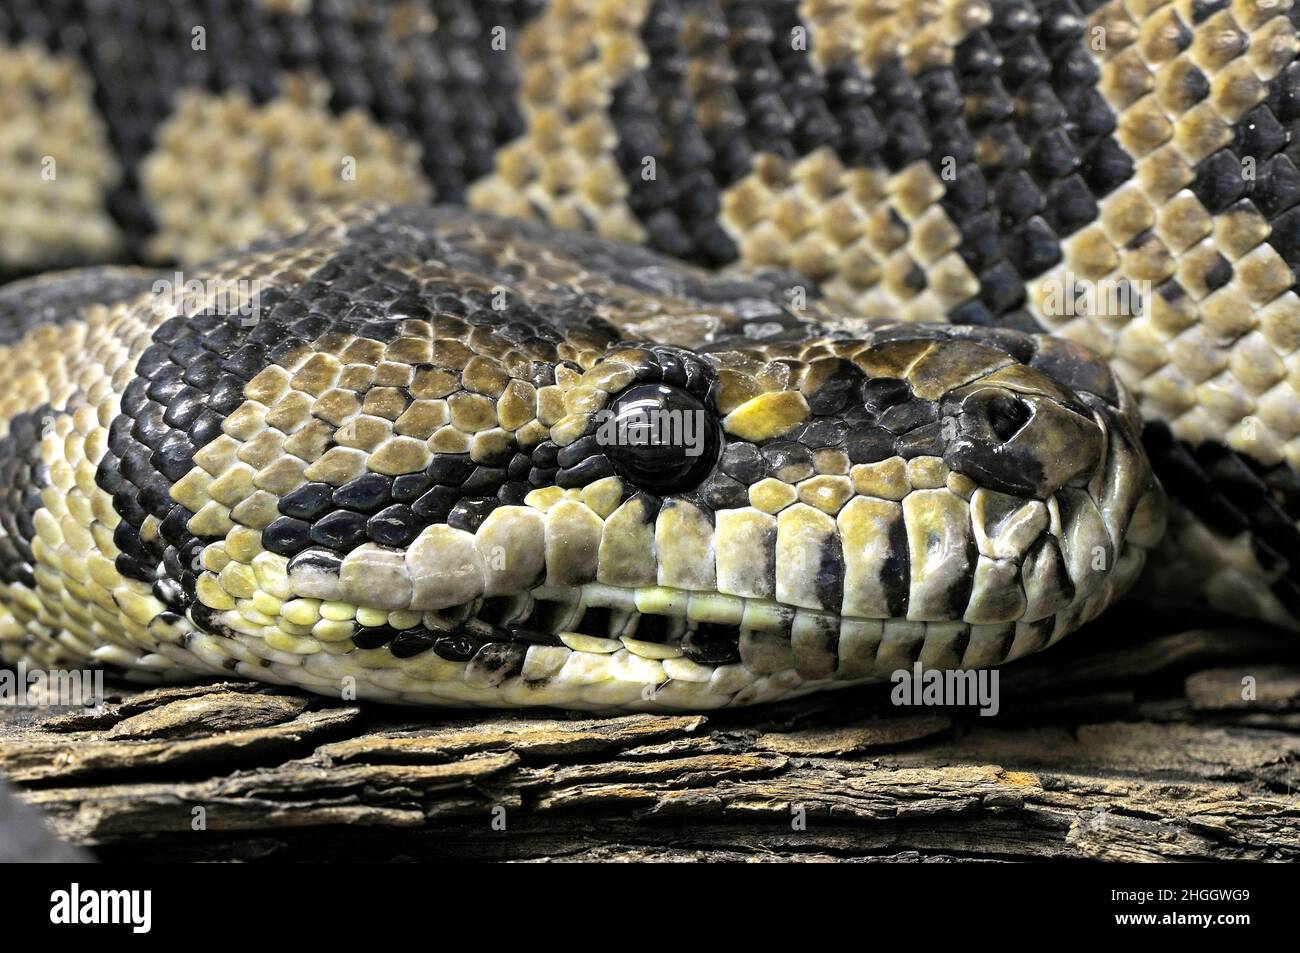 Carpet python morelia spilota variegata hi-res stock photography and images  - Alamy